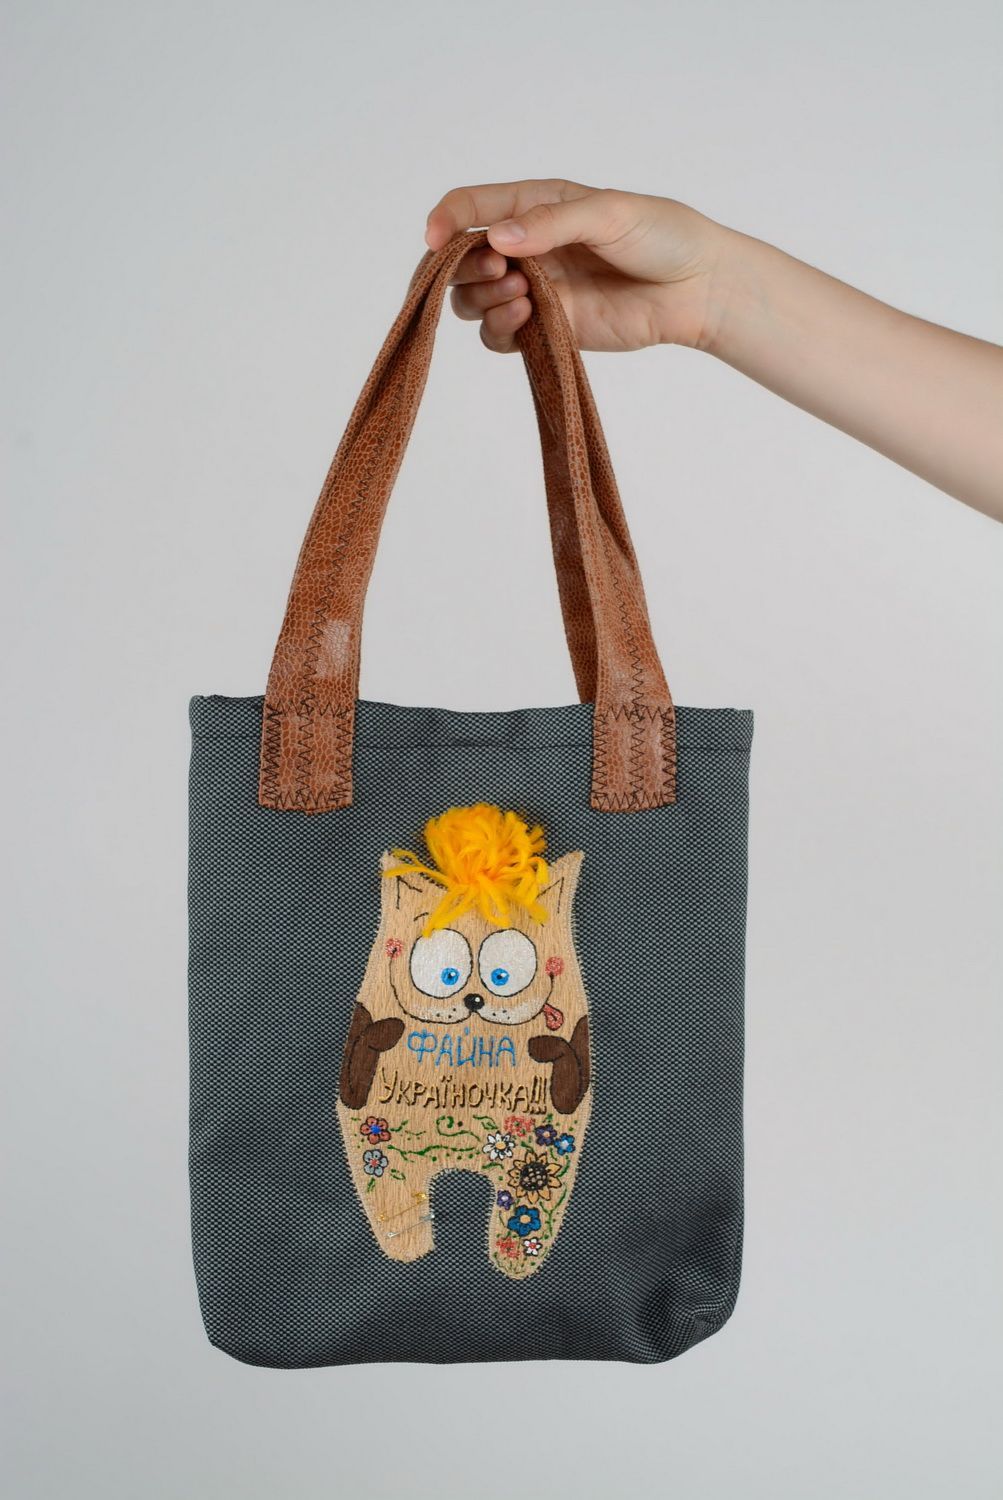 Textil-Tasche mit Katzenprint foto 2